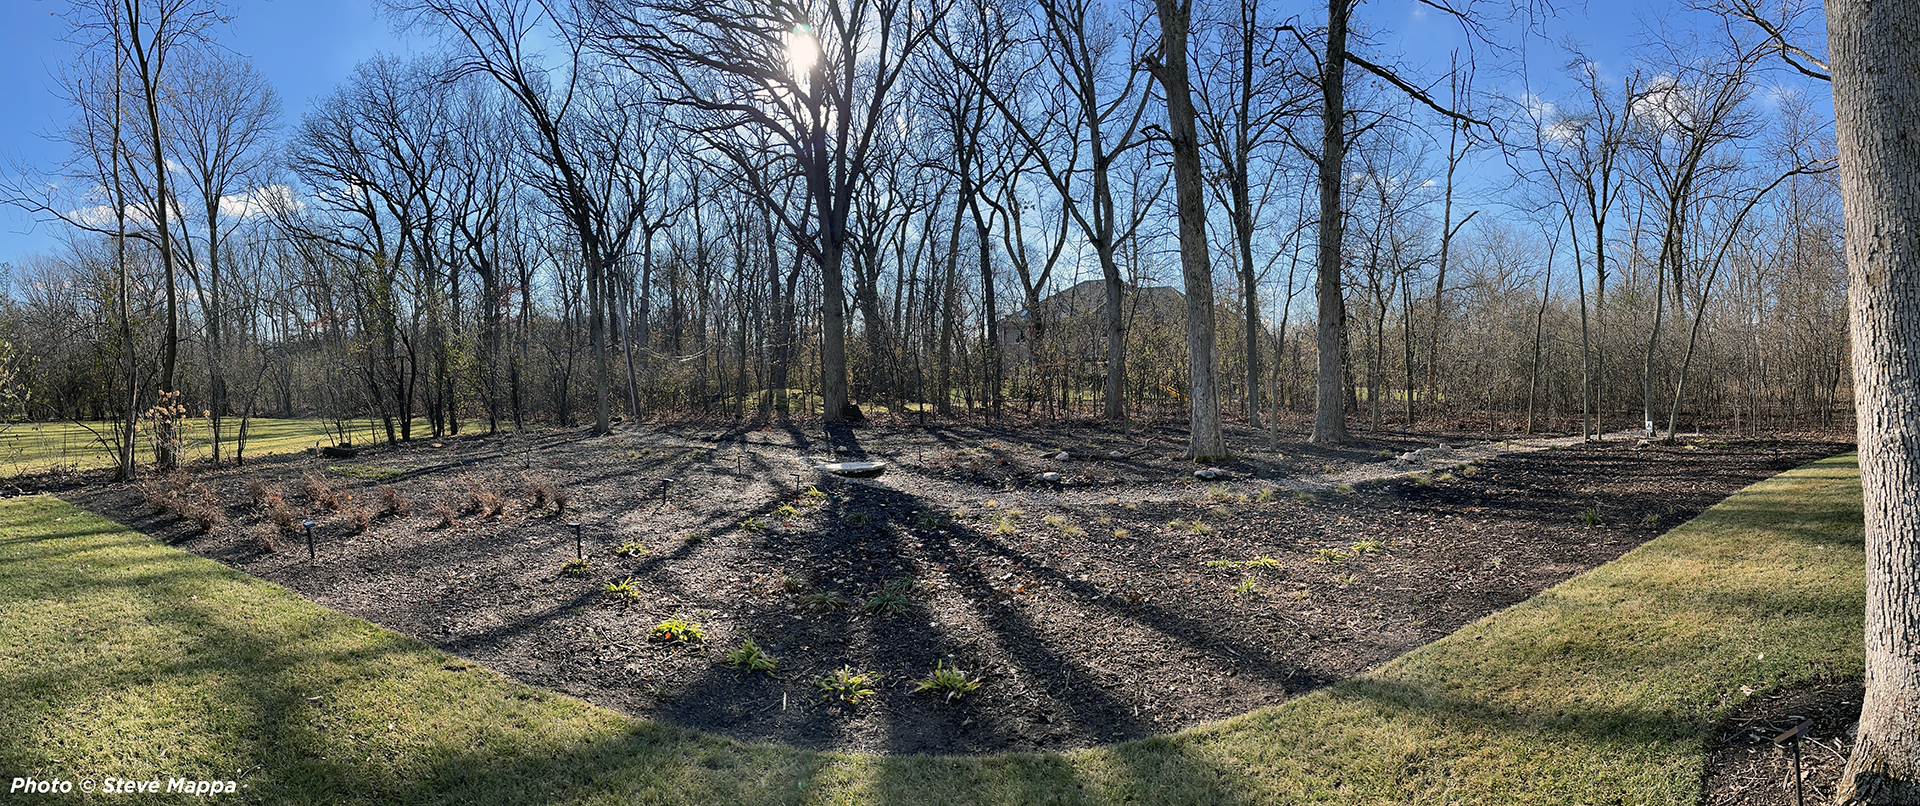 View of a beautiful backyard following buckthorn removal.